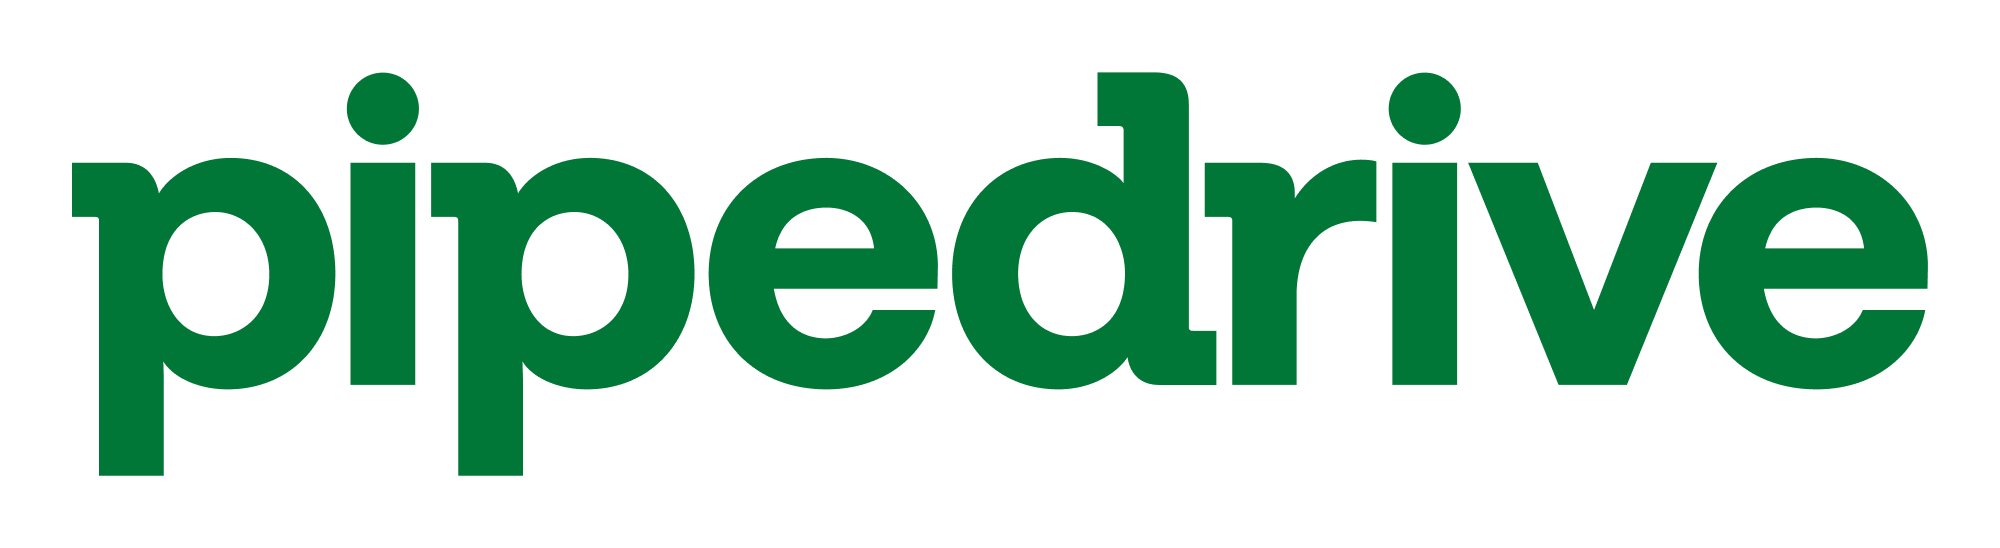 pipedrive logo in green